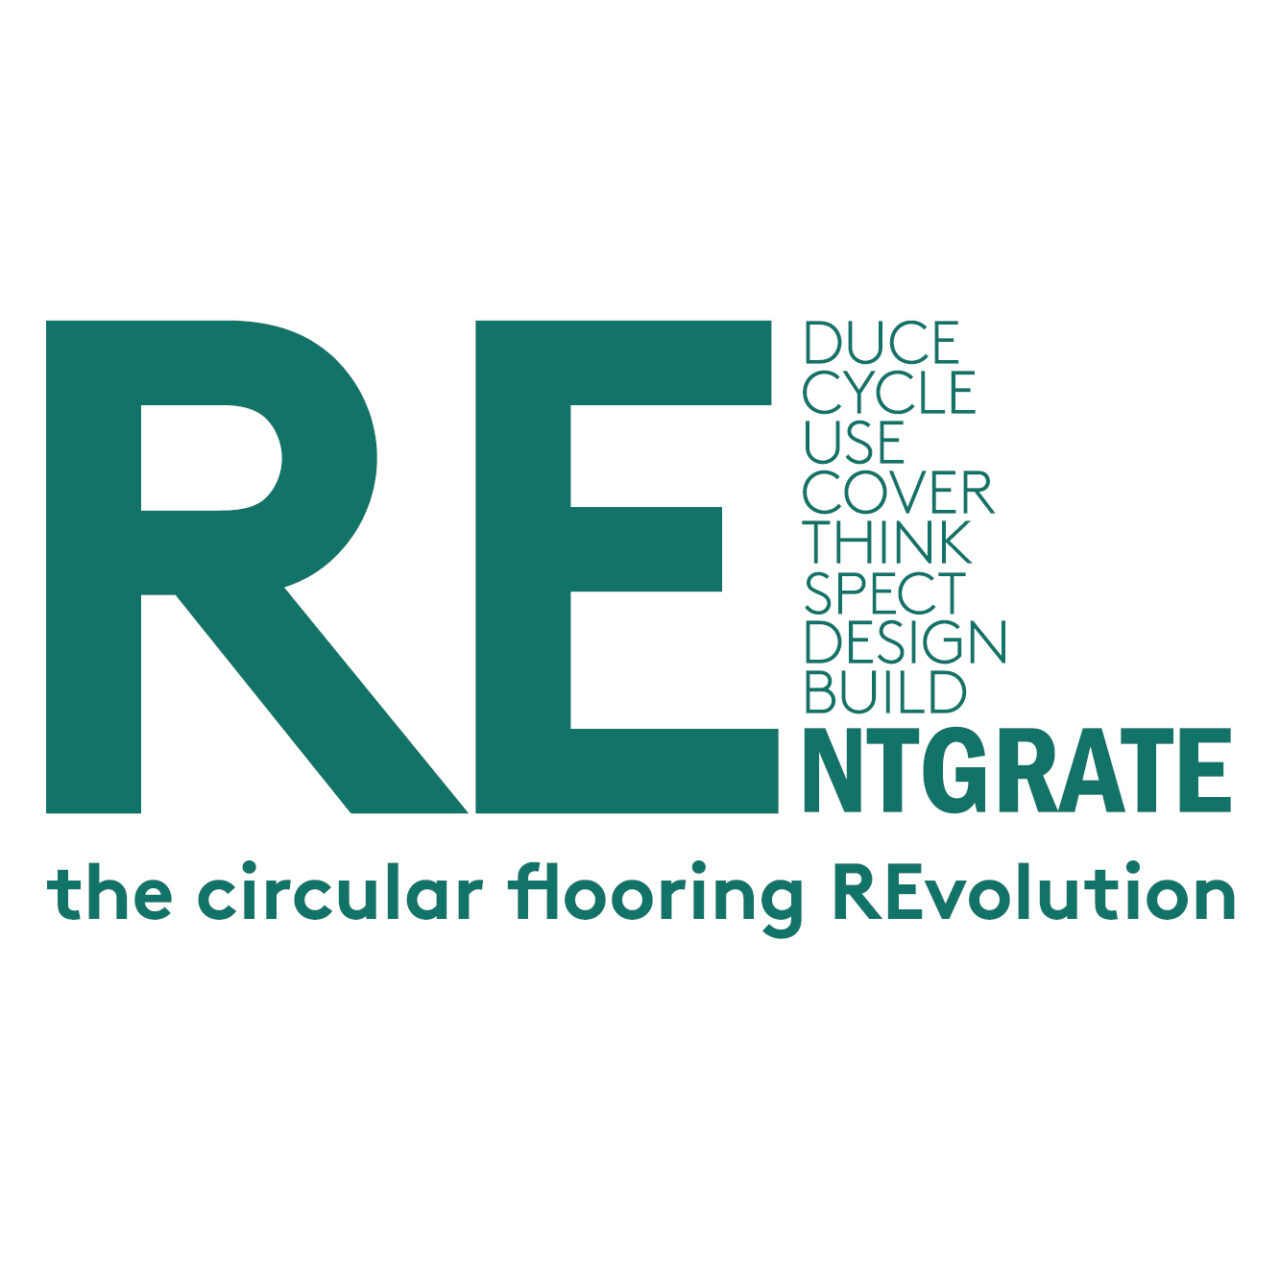 R Entgrate square logo